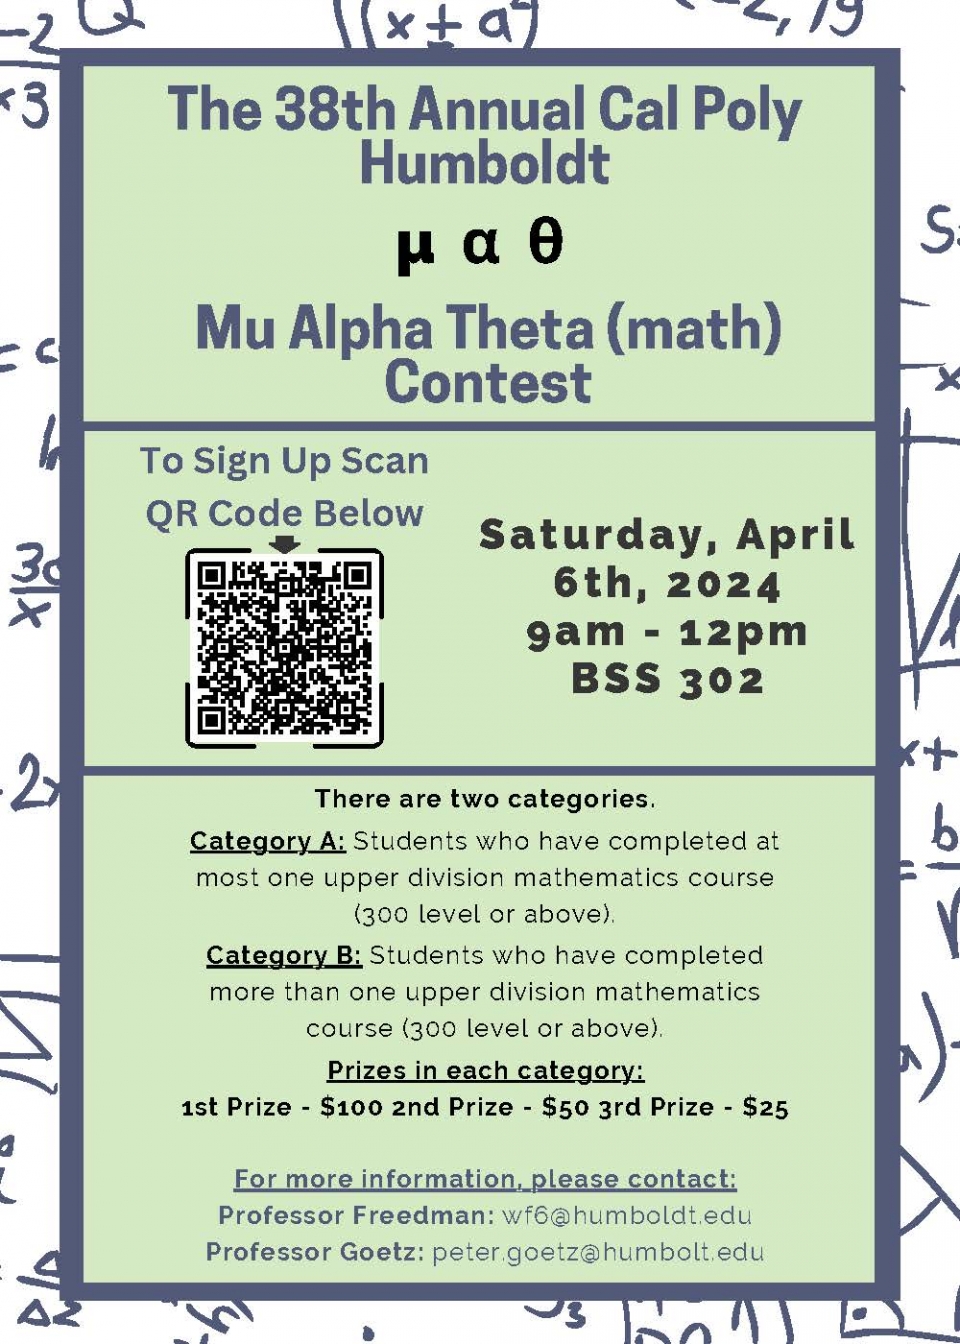 The 38th Annual Mu Alpha Theta (Math) Contest